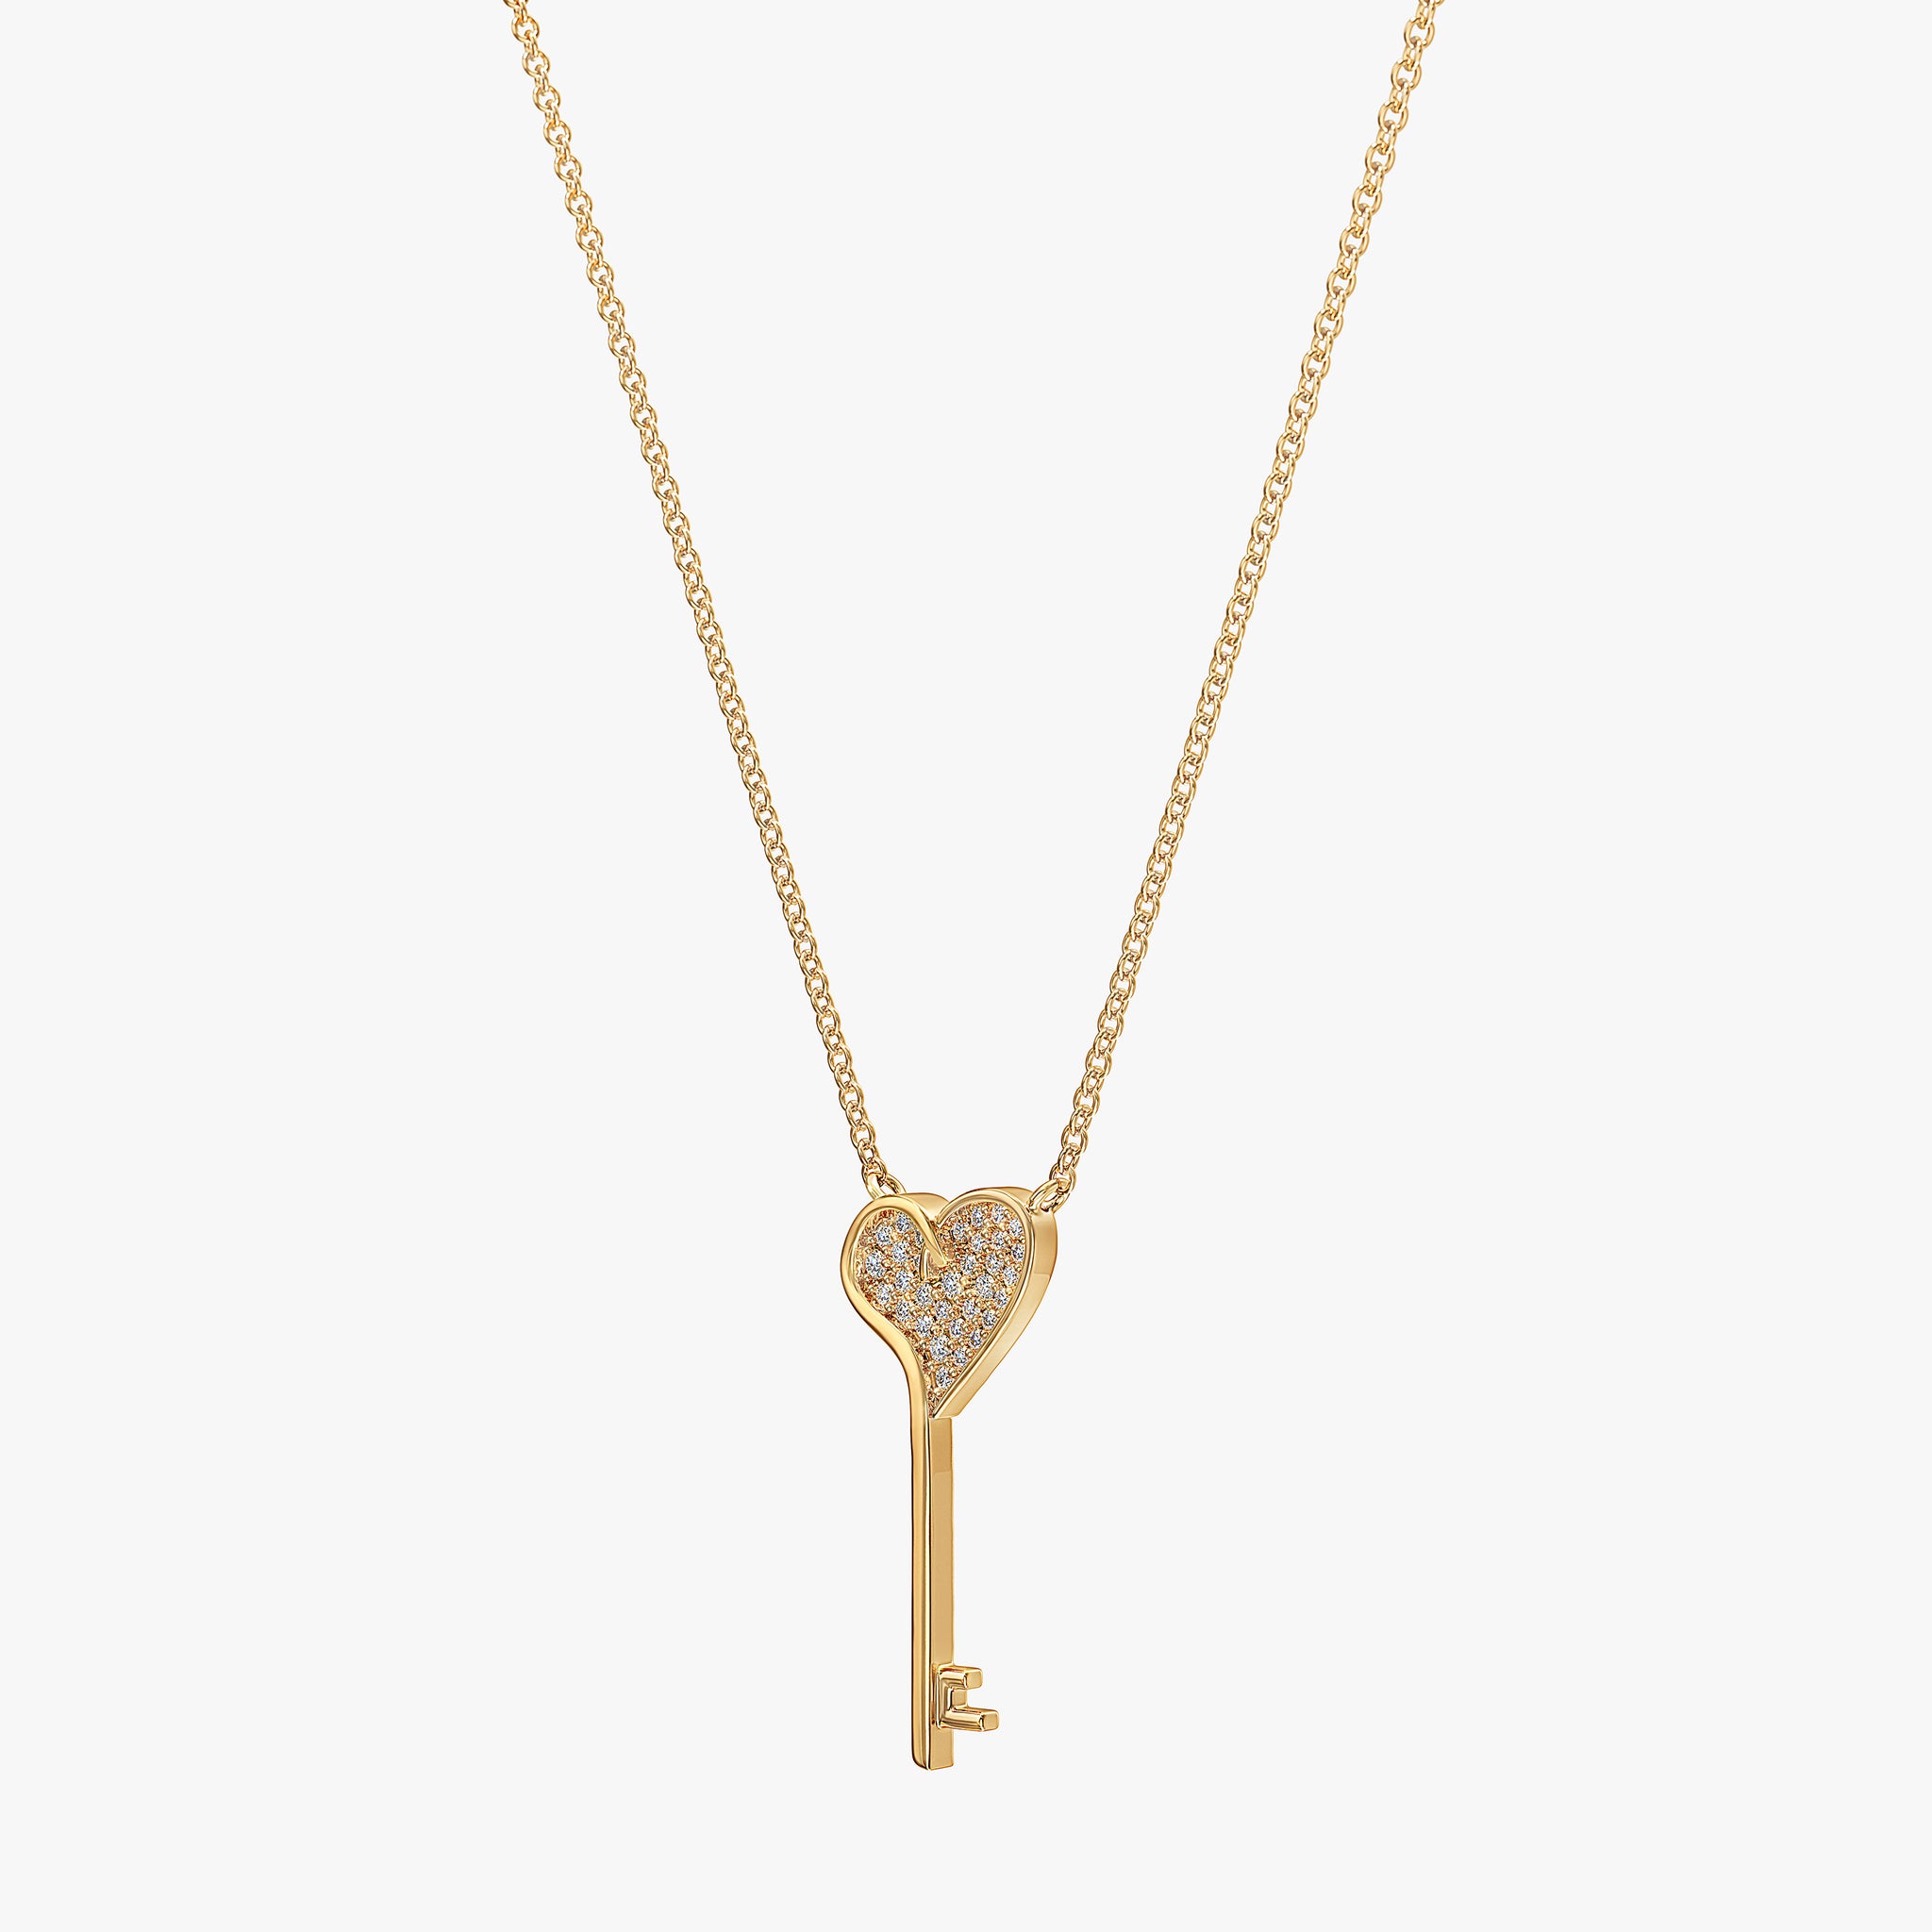 Gold Lock & Key Initial Pendant Necklace - J